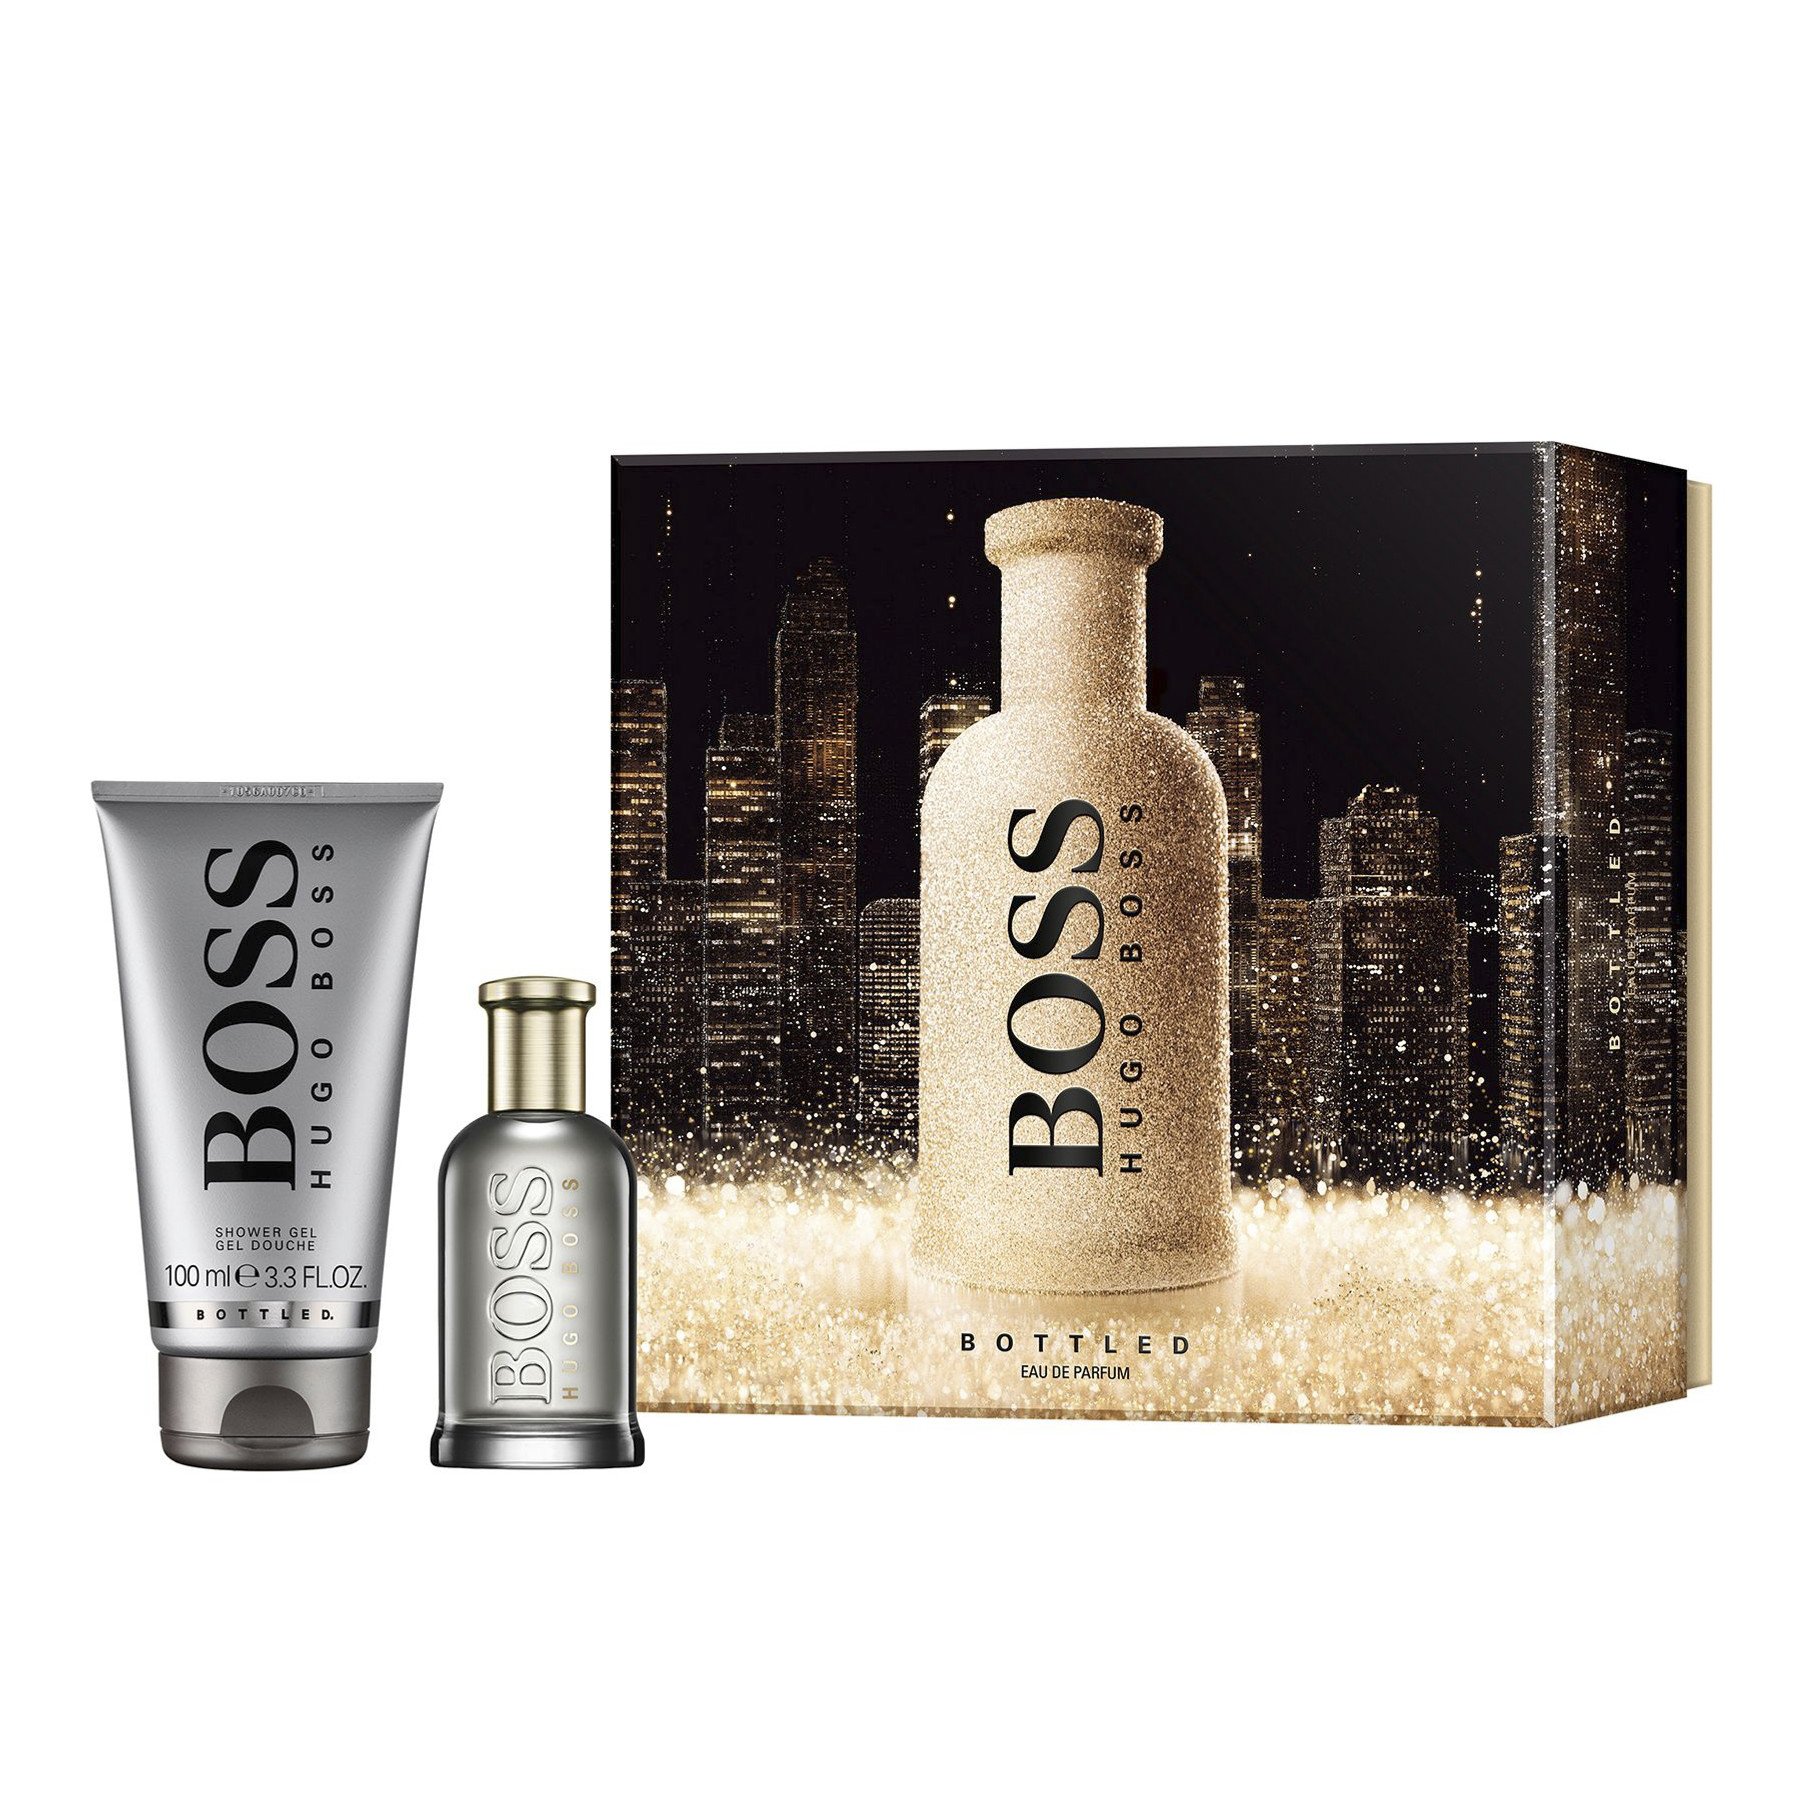 BOSS Bottled for Him Eau de Parfum 50ml Gift Set, £57